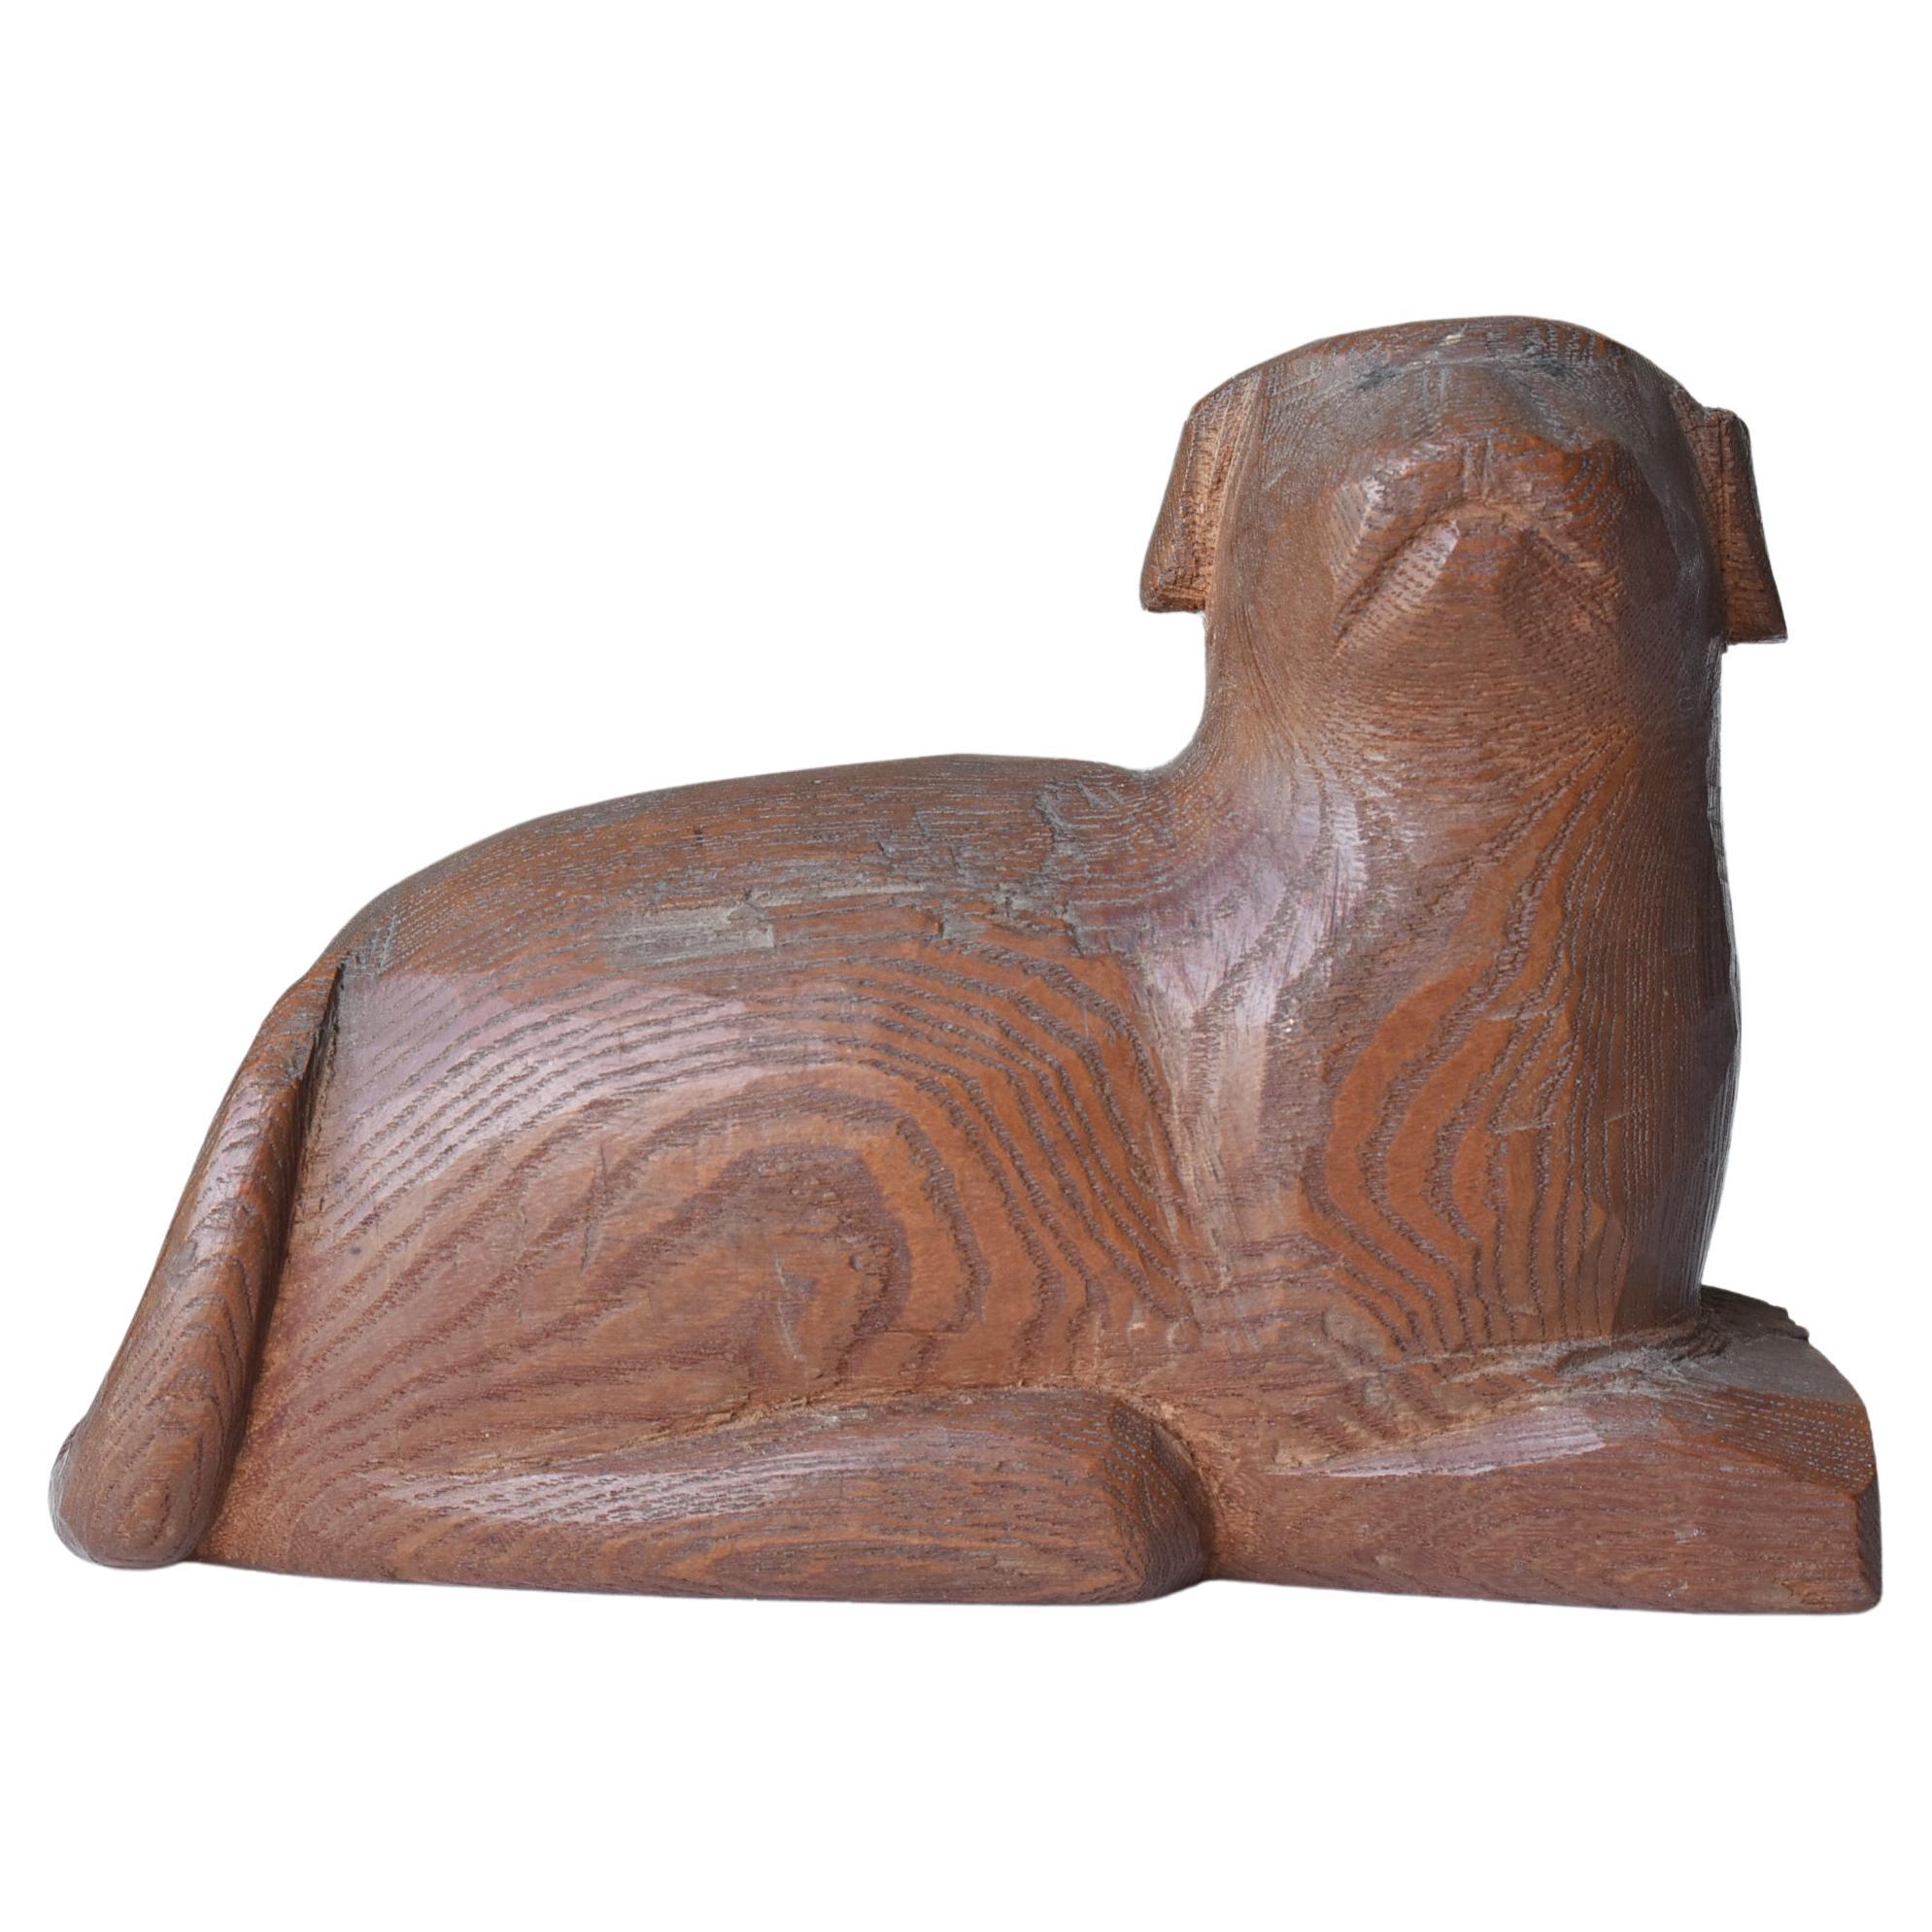 Japanese Antique Wood Carving Dog 1920s-1940s/Figurine Mingei Object Sculpture